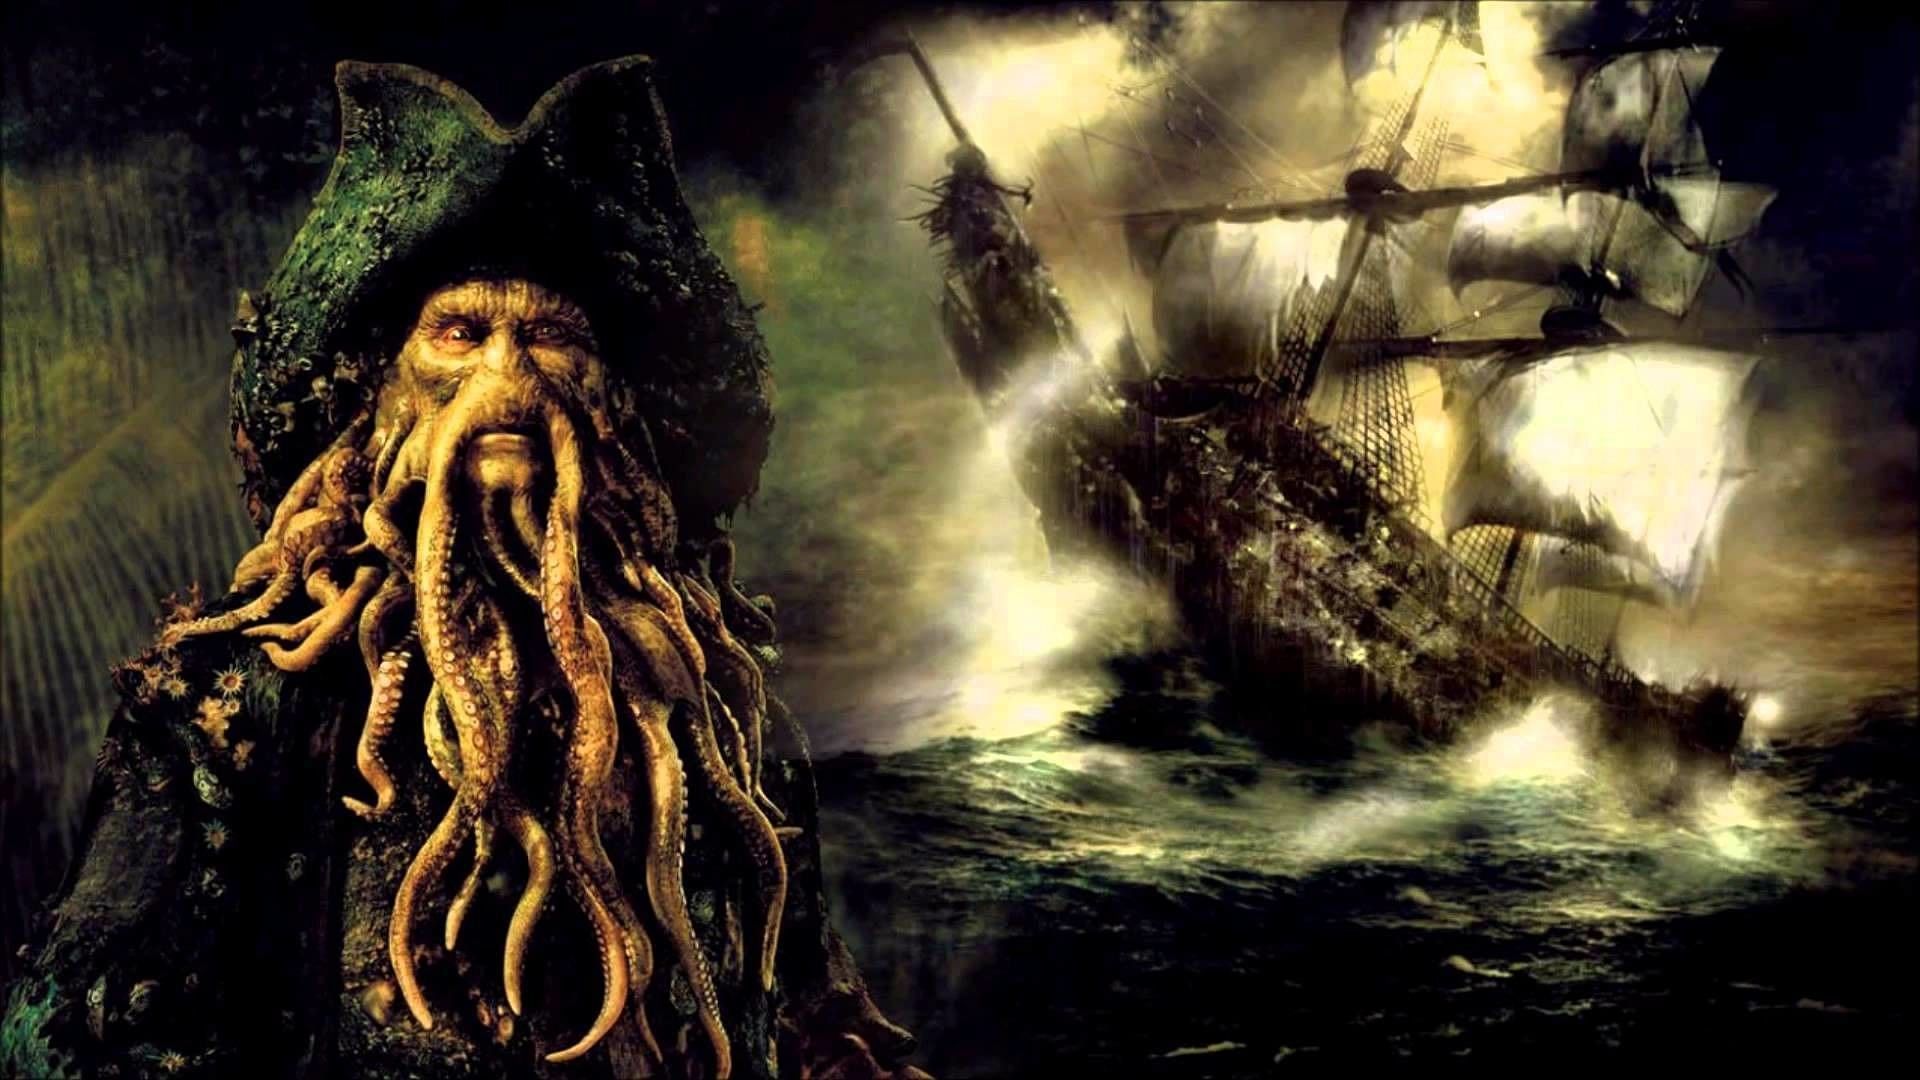 Davy Jones in the series (Image via Disney)